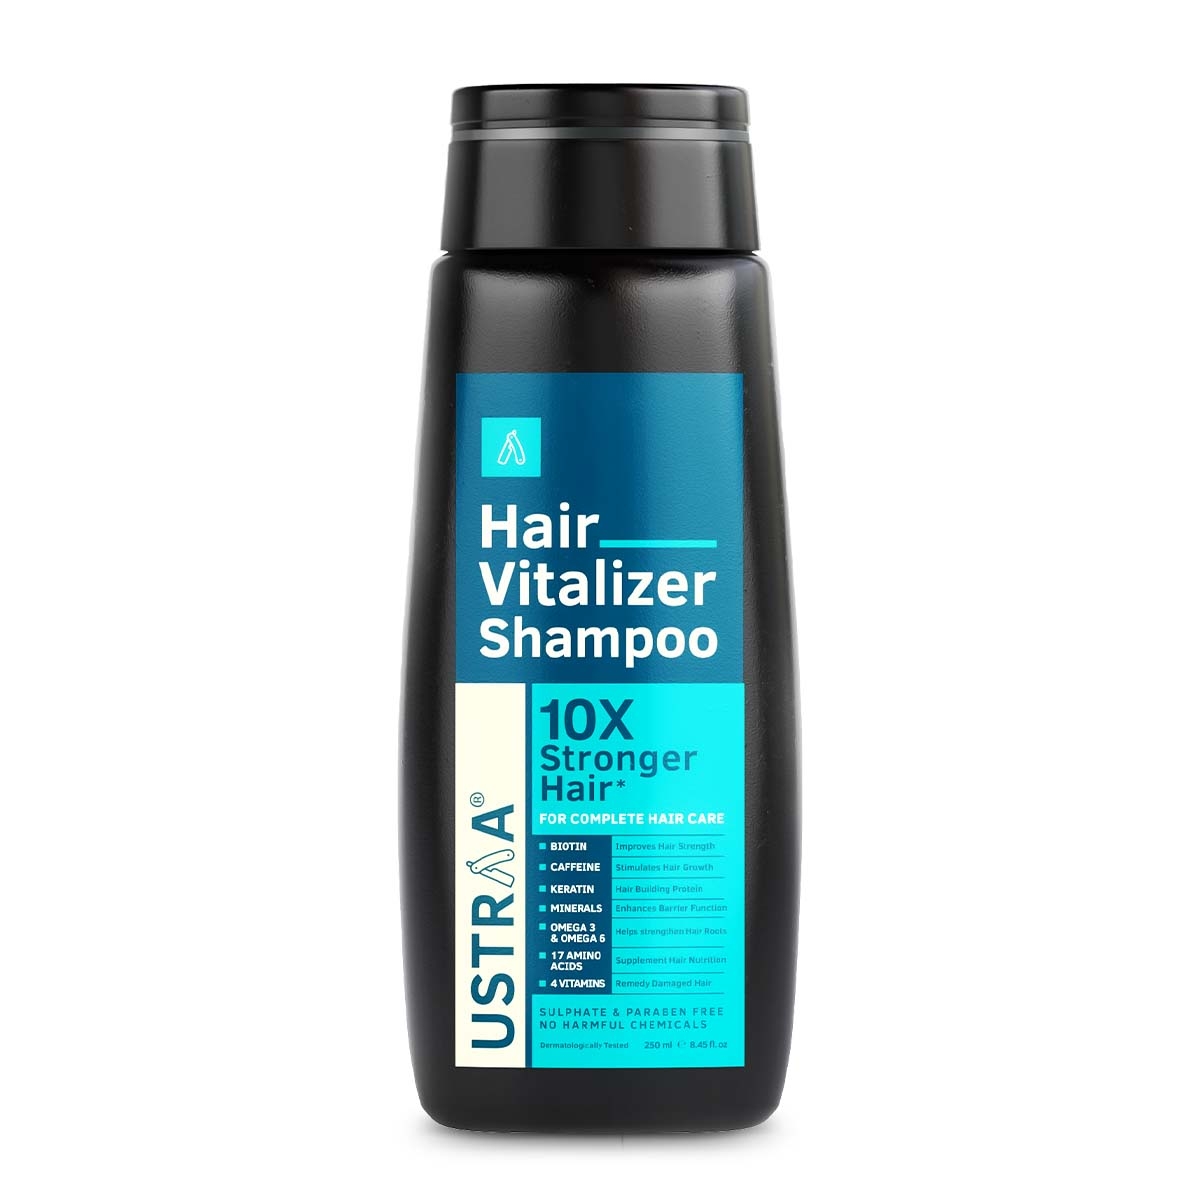 Ustraa Hair Vitalizer Shampoo - 250ml & Base Camp Cologne - 100ml